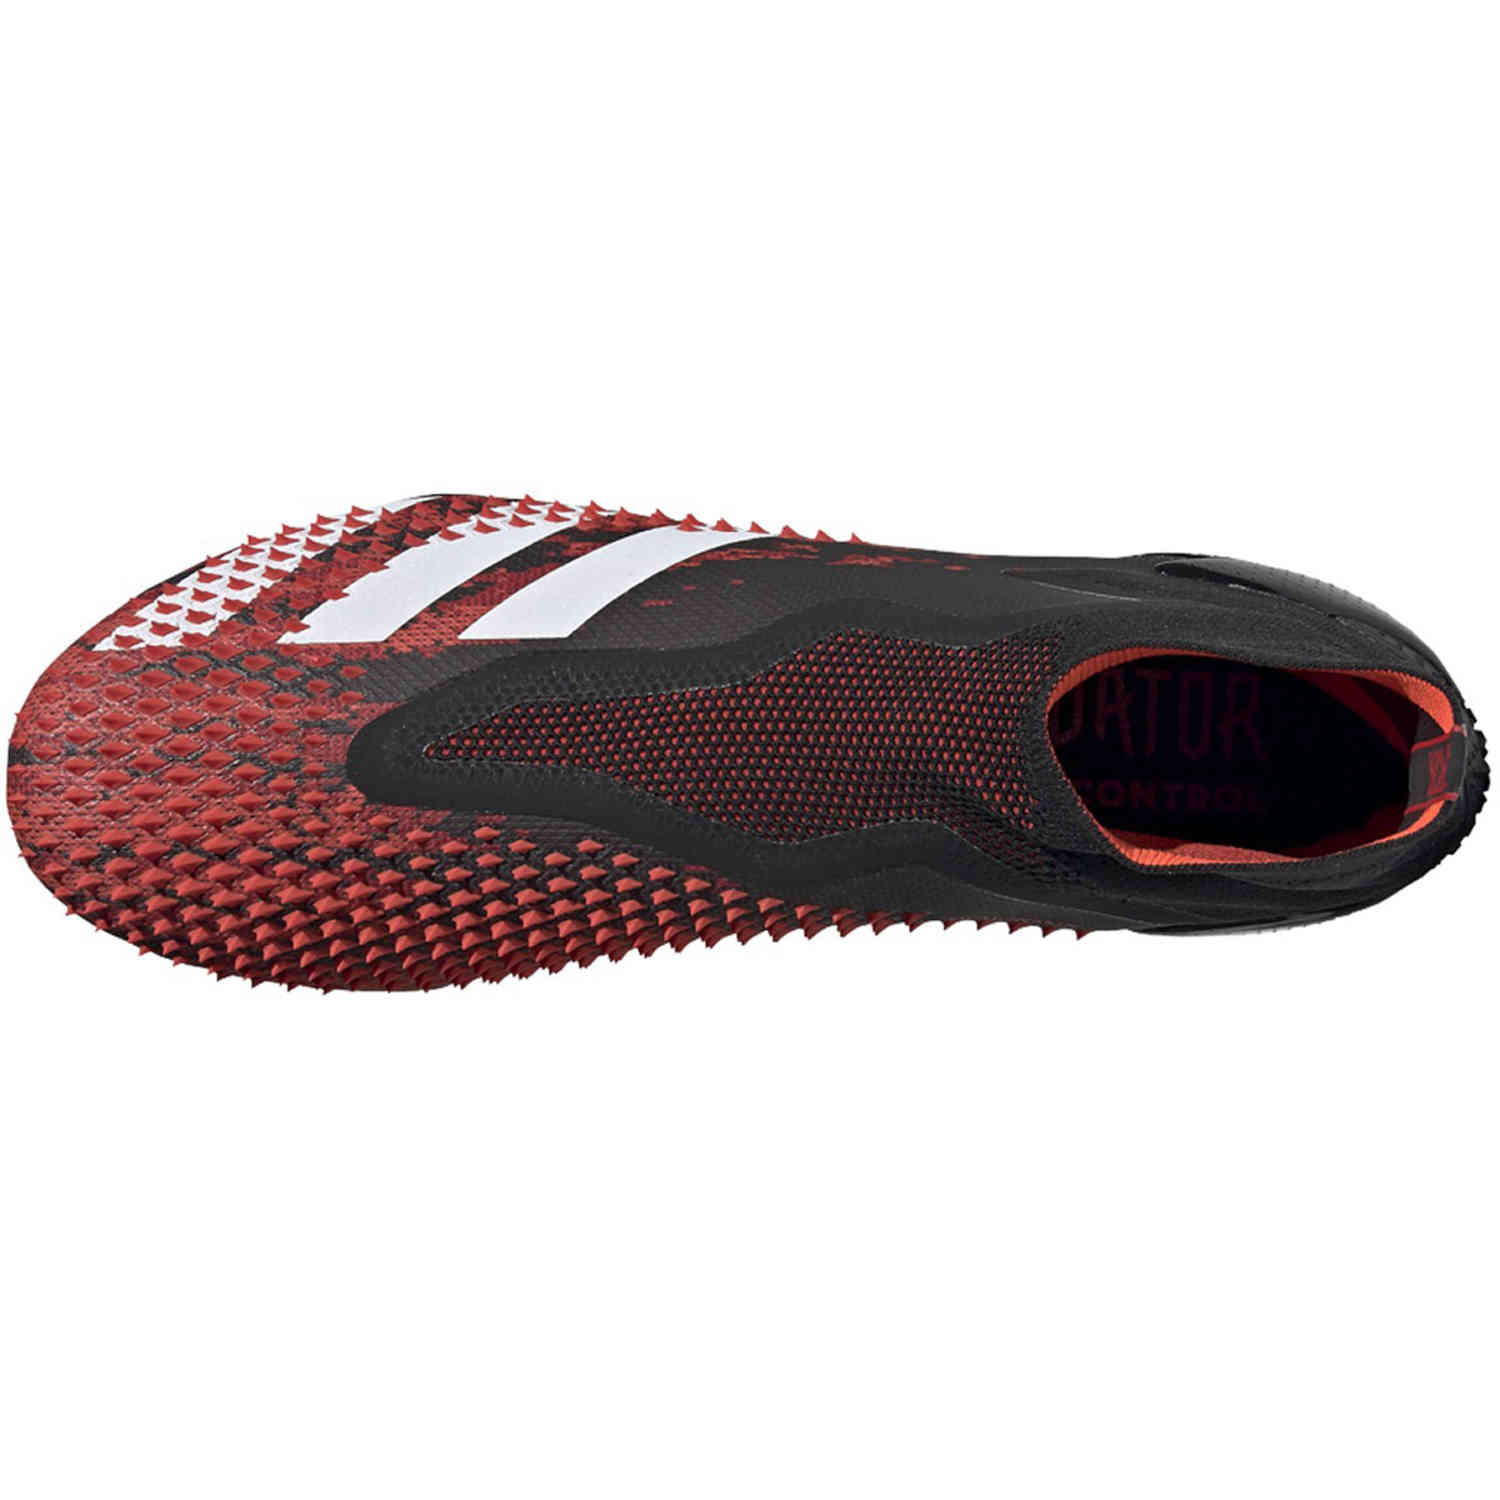 adidas Predator Athletic Shoes Size 10.5 for Men eBay